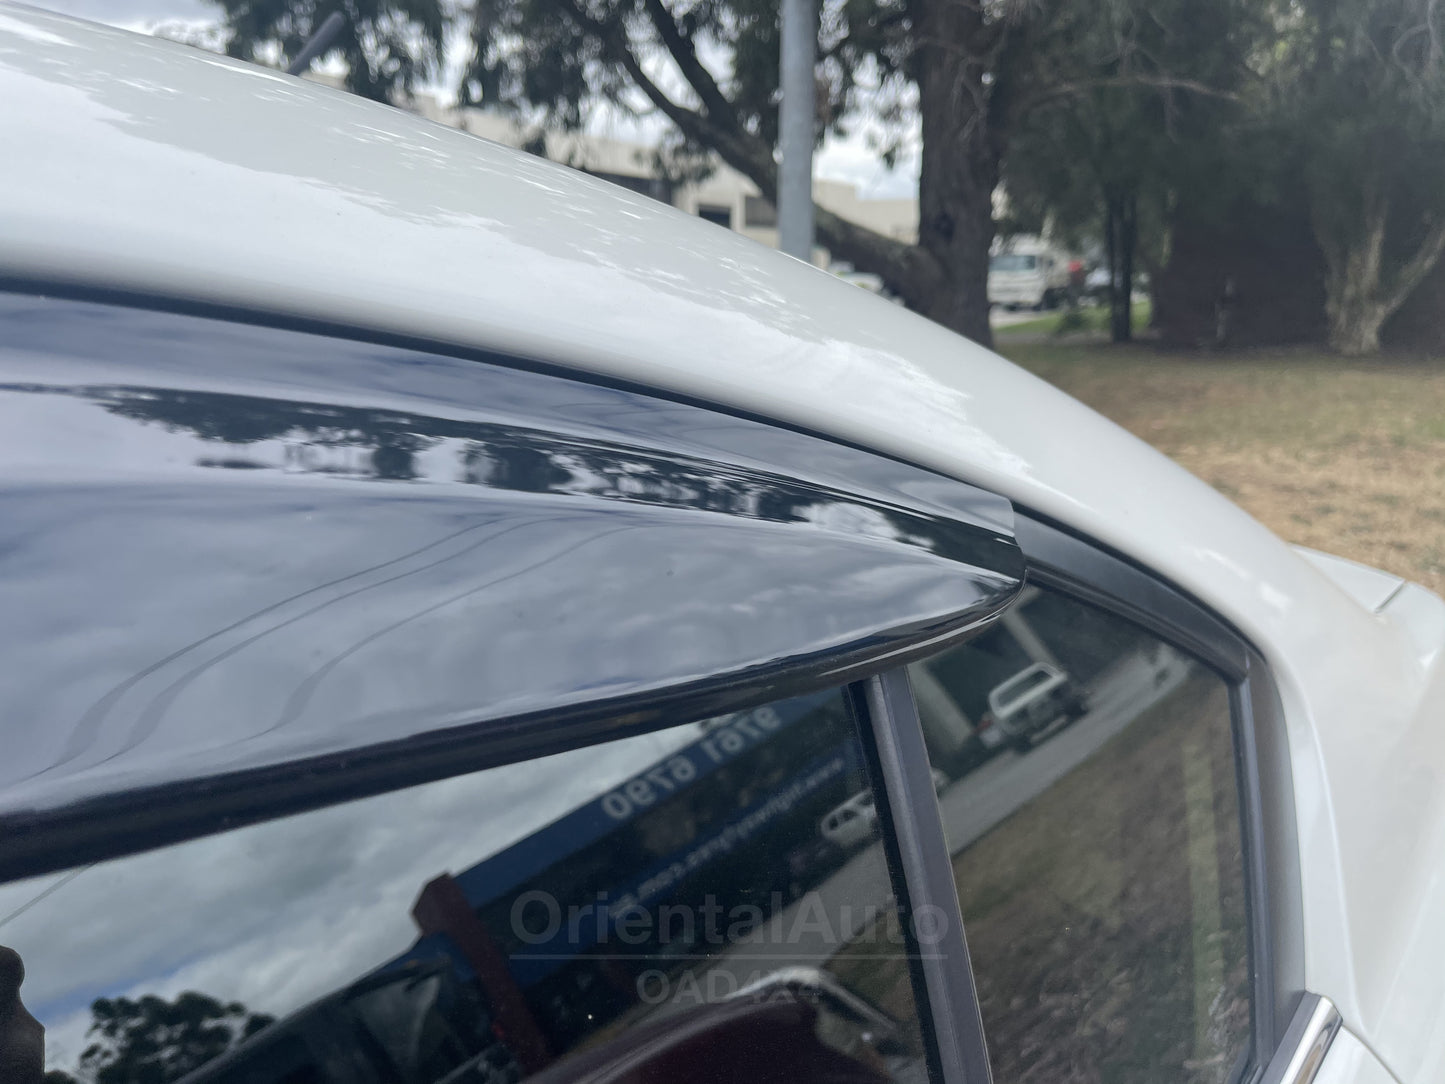 Luxury Weathershields For Subaru WRX STI Sedan VA Series 2014-2021 Weather Shields Window Visor